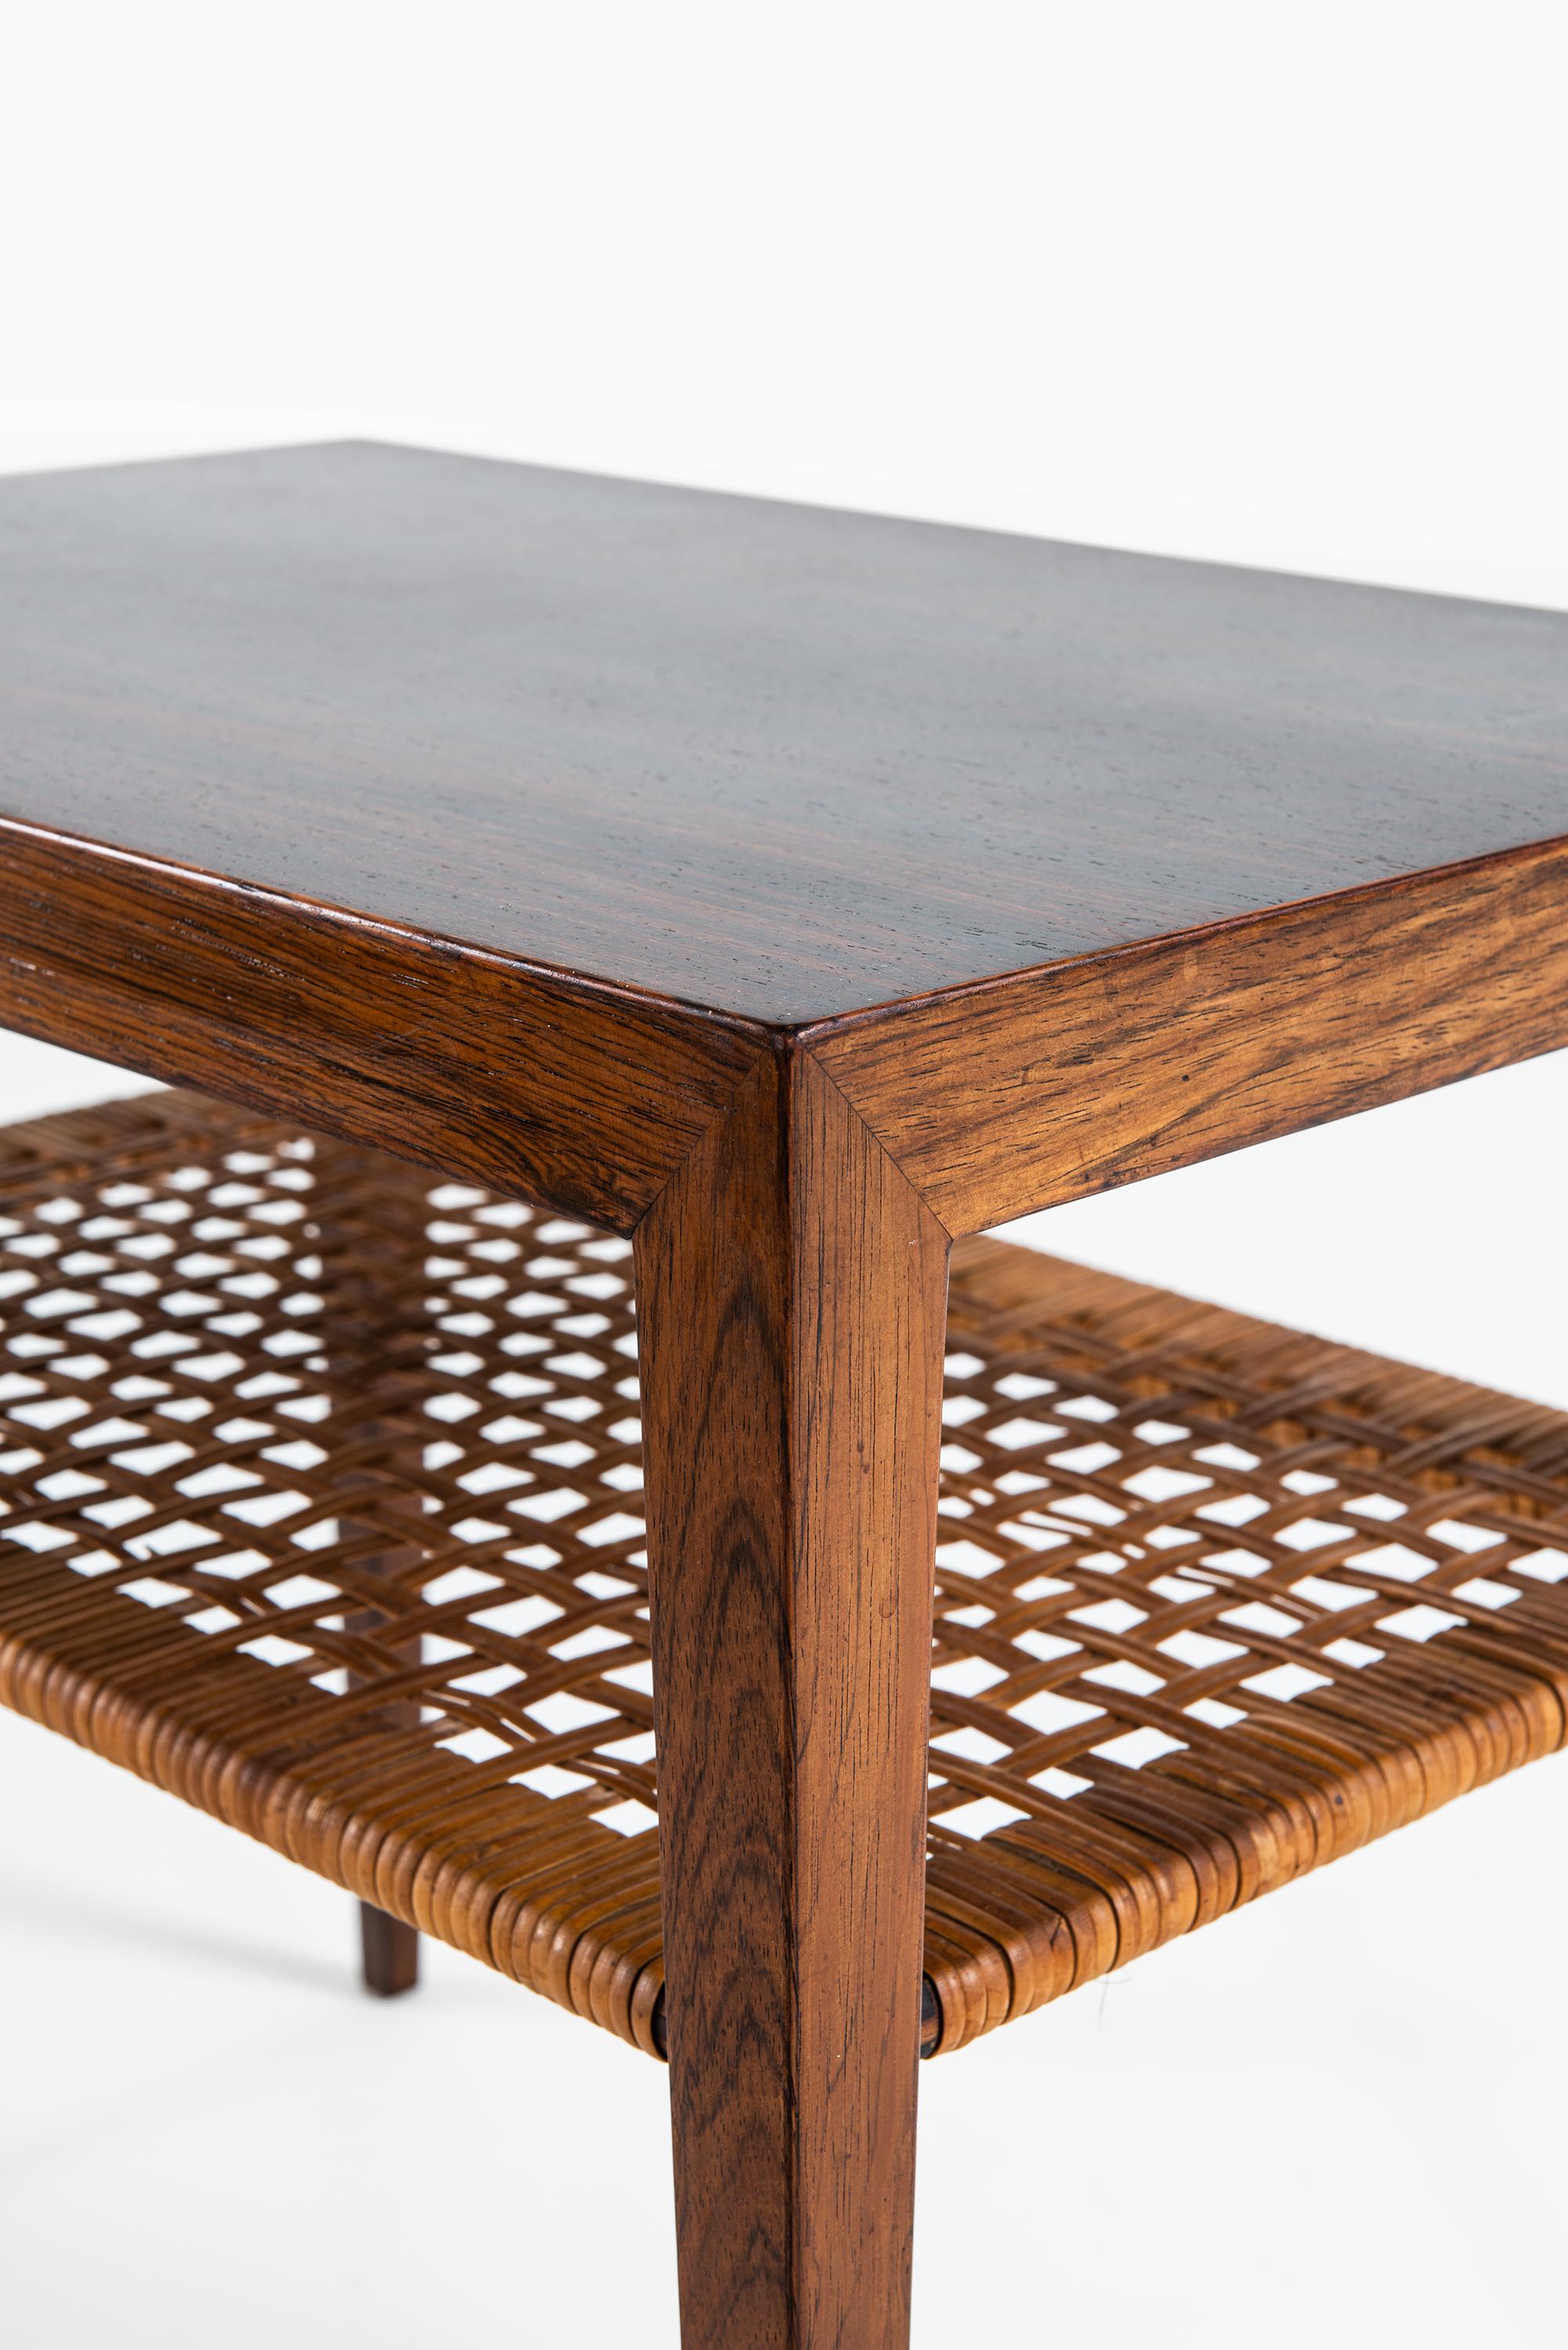 Rare side table designed by Severin Hansen. Produced by Haslev møbelsnedkeri in Denmark.